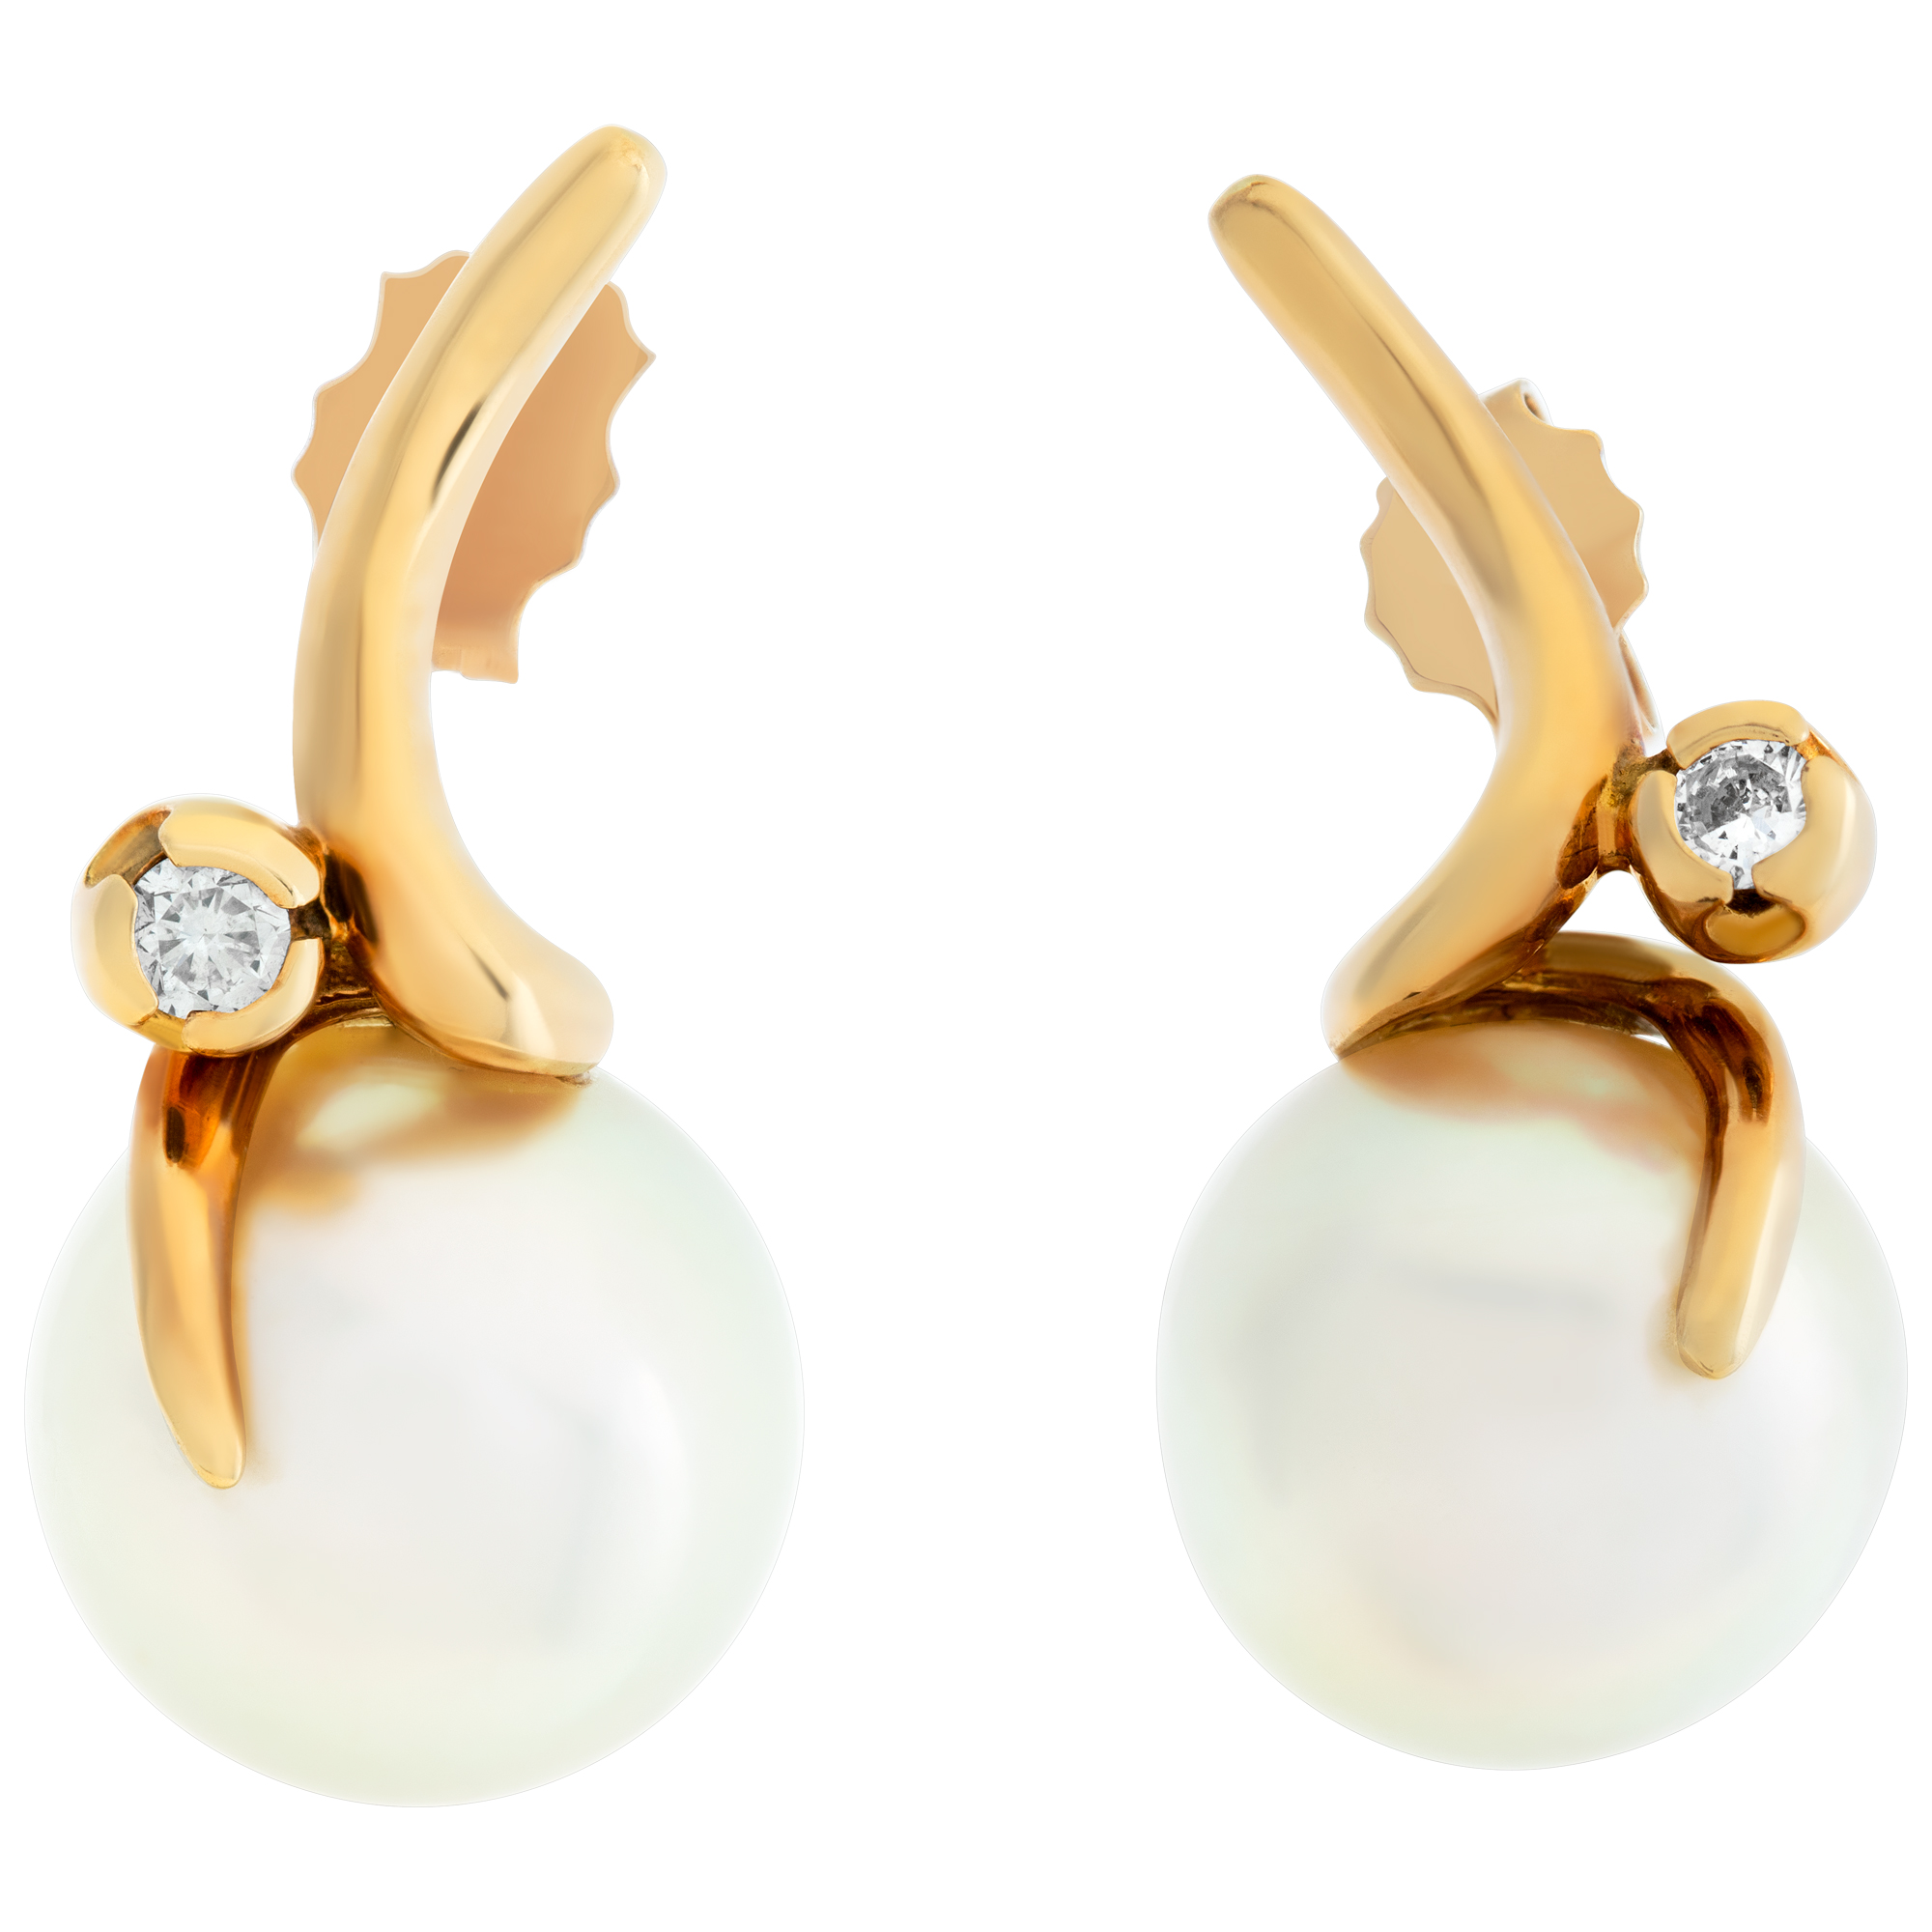 Oval South Sea pearl  (14 x 14.50 mm) & diamonds earrings, set in 18k yellow gold